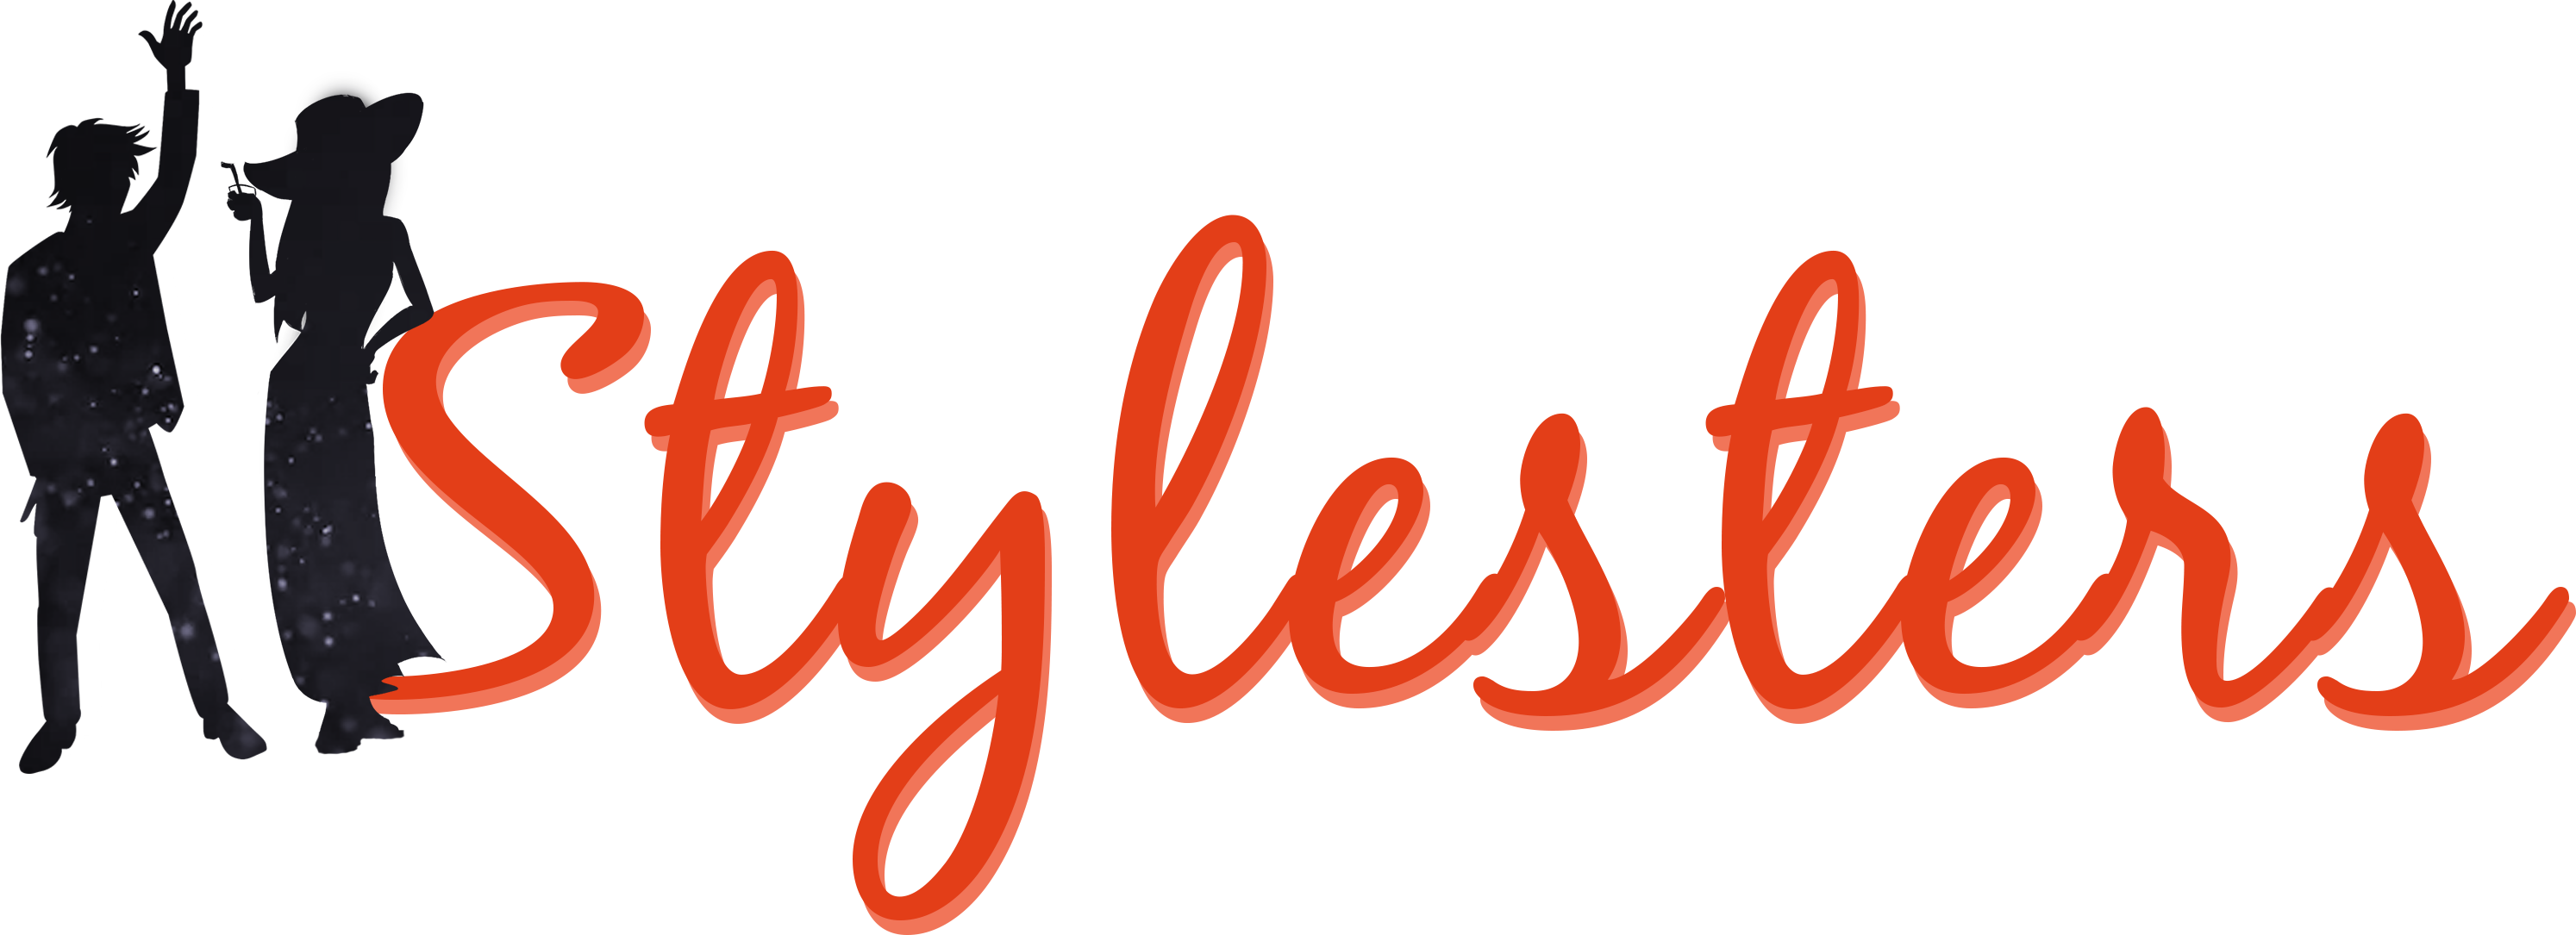 Stylesters logo